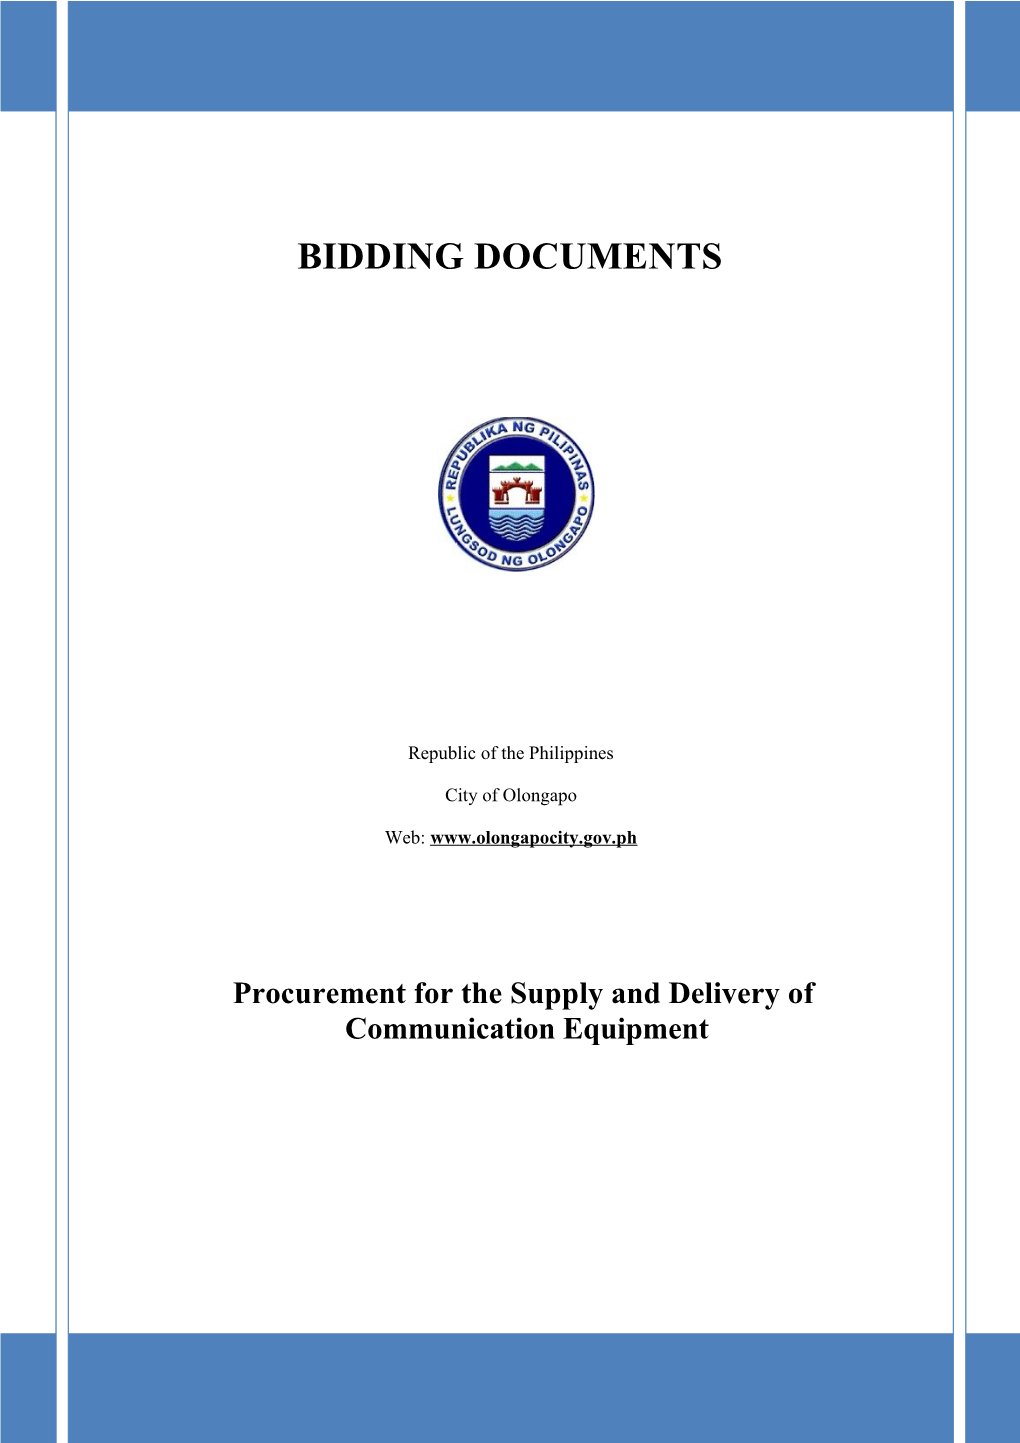 Philippine Bidding Documents s14